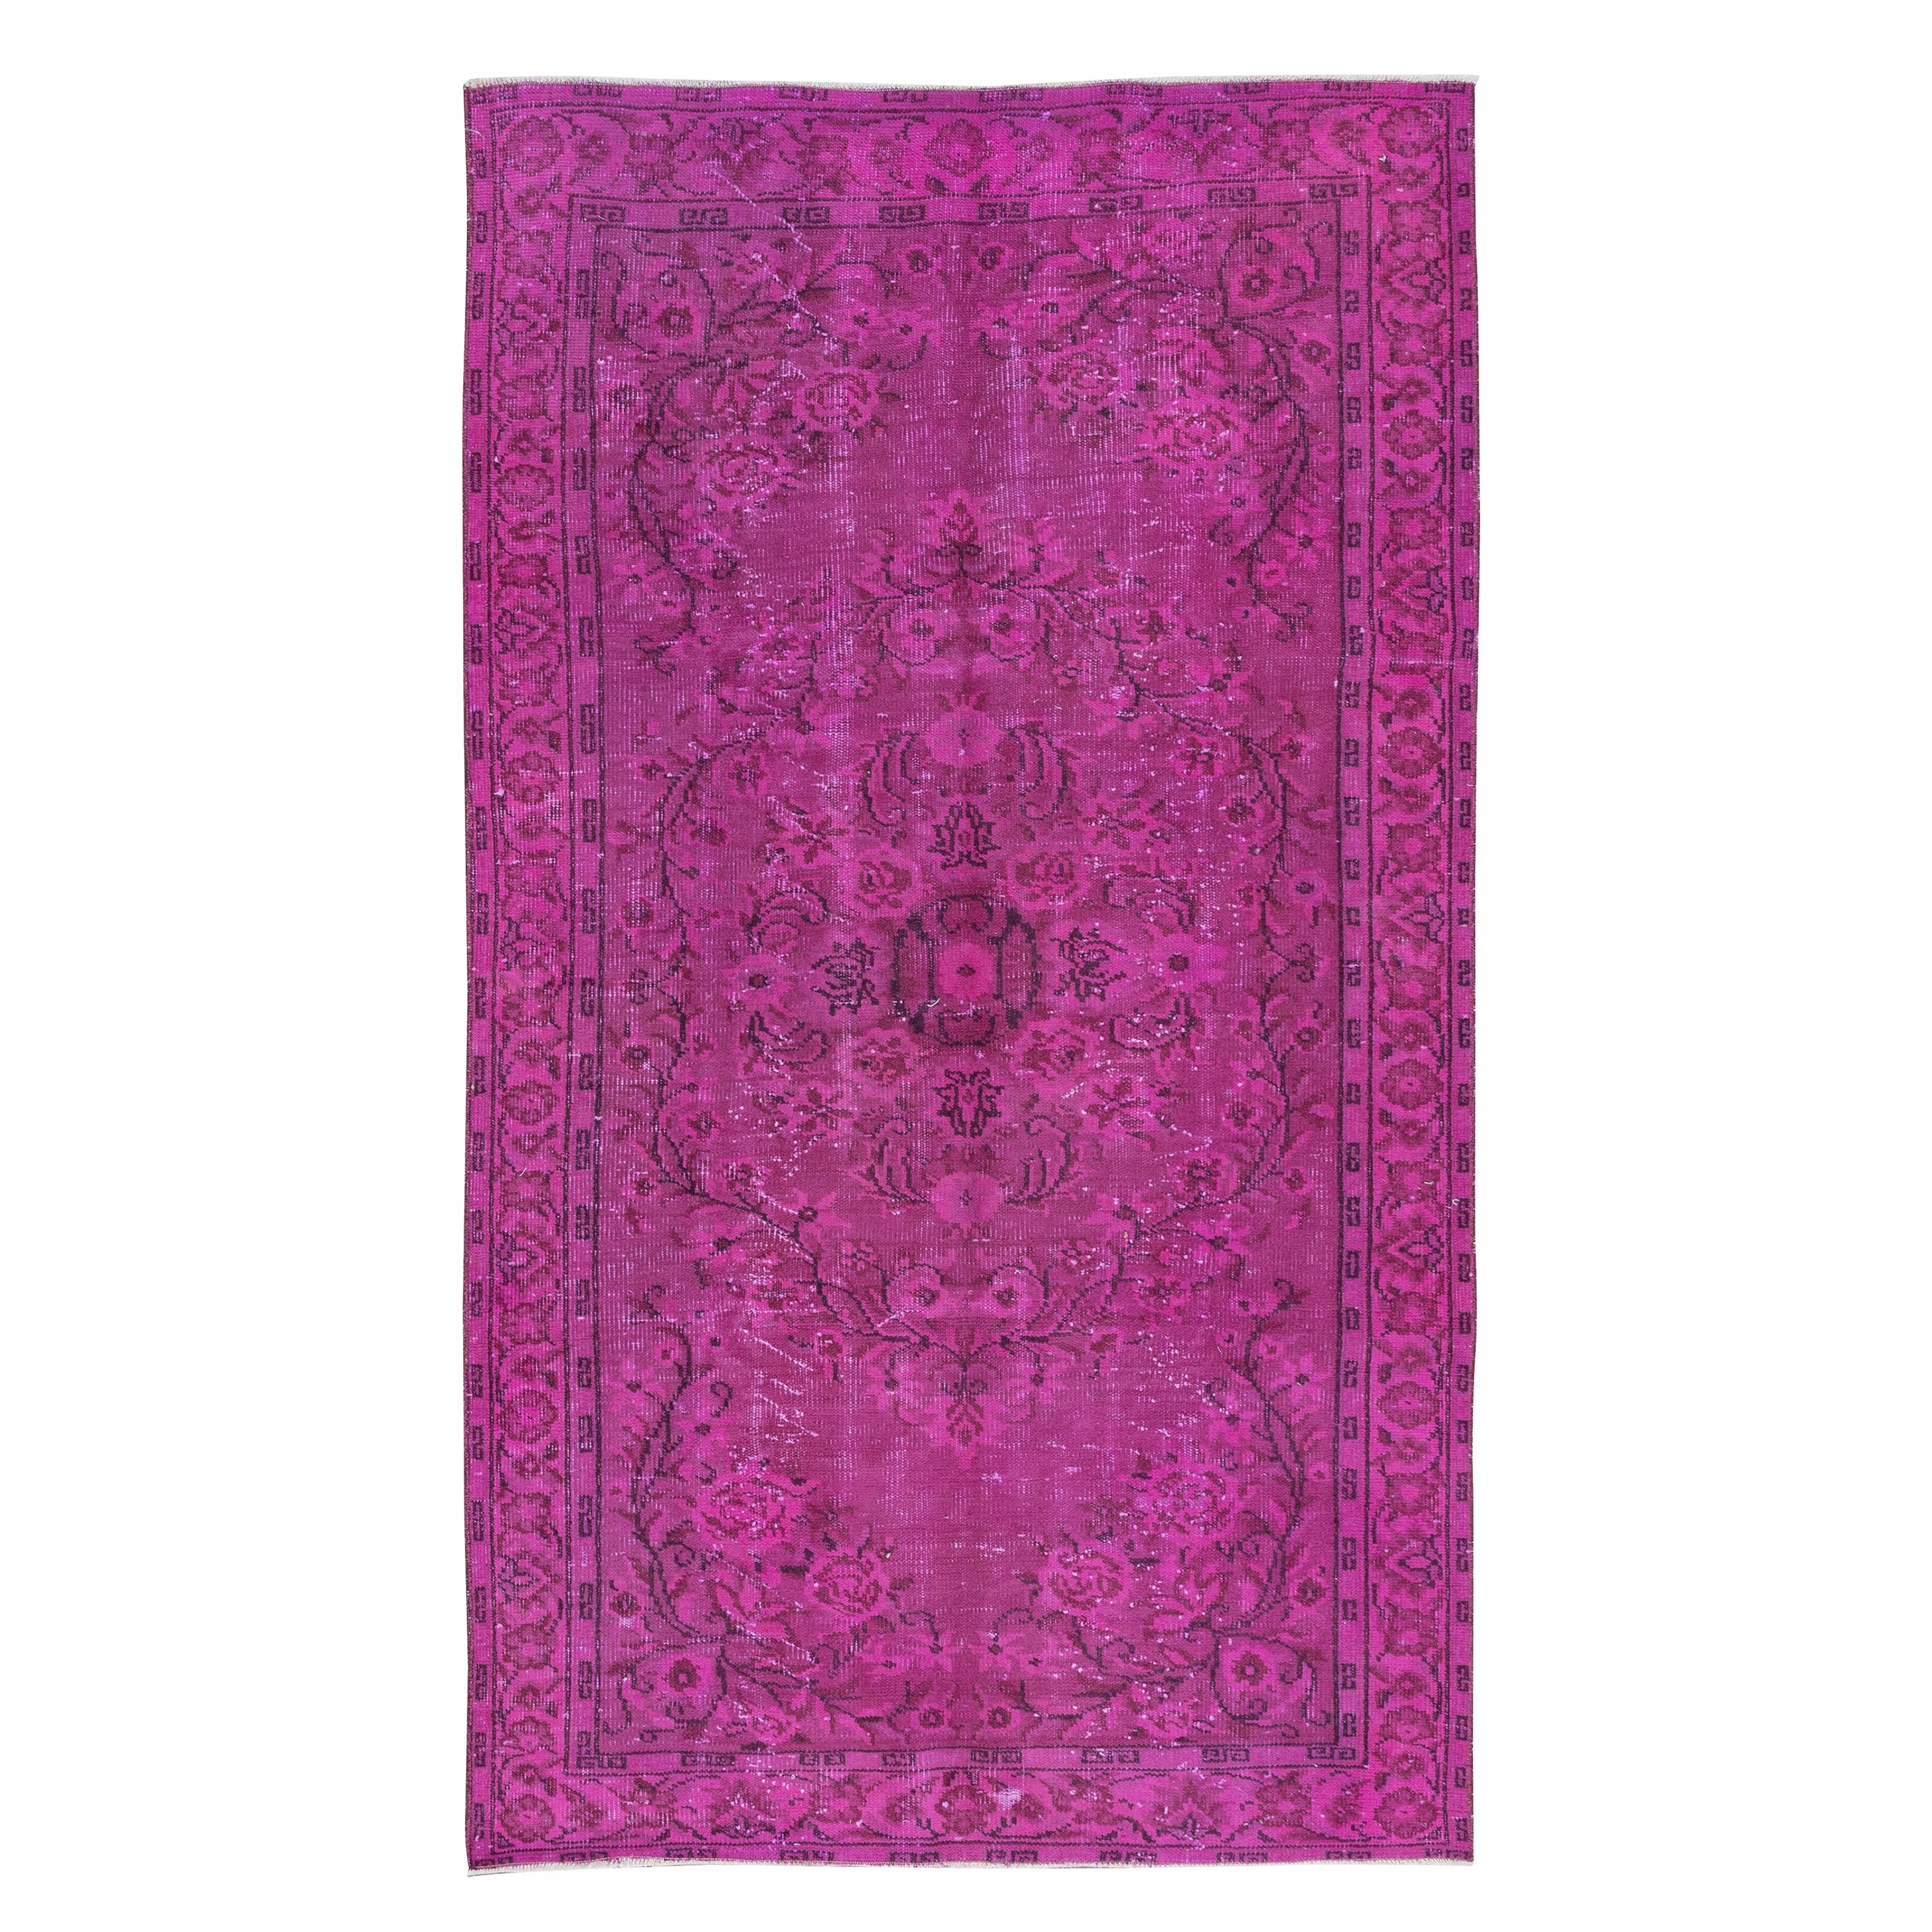 4.5x7.8 Ft Contemporary Pink Area Rug, handgefertigter türkischer Teppich, Bodenbelag